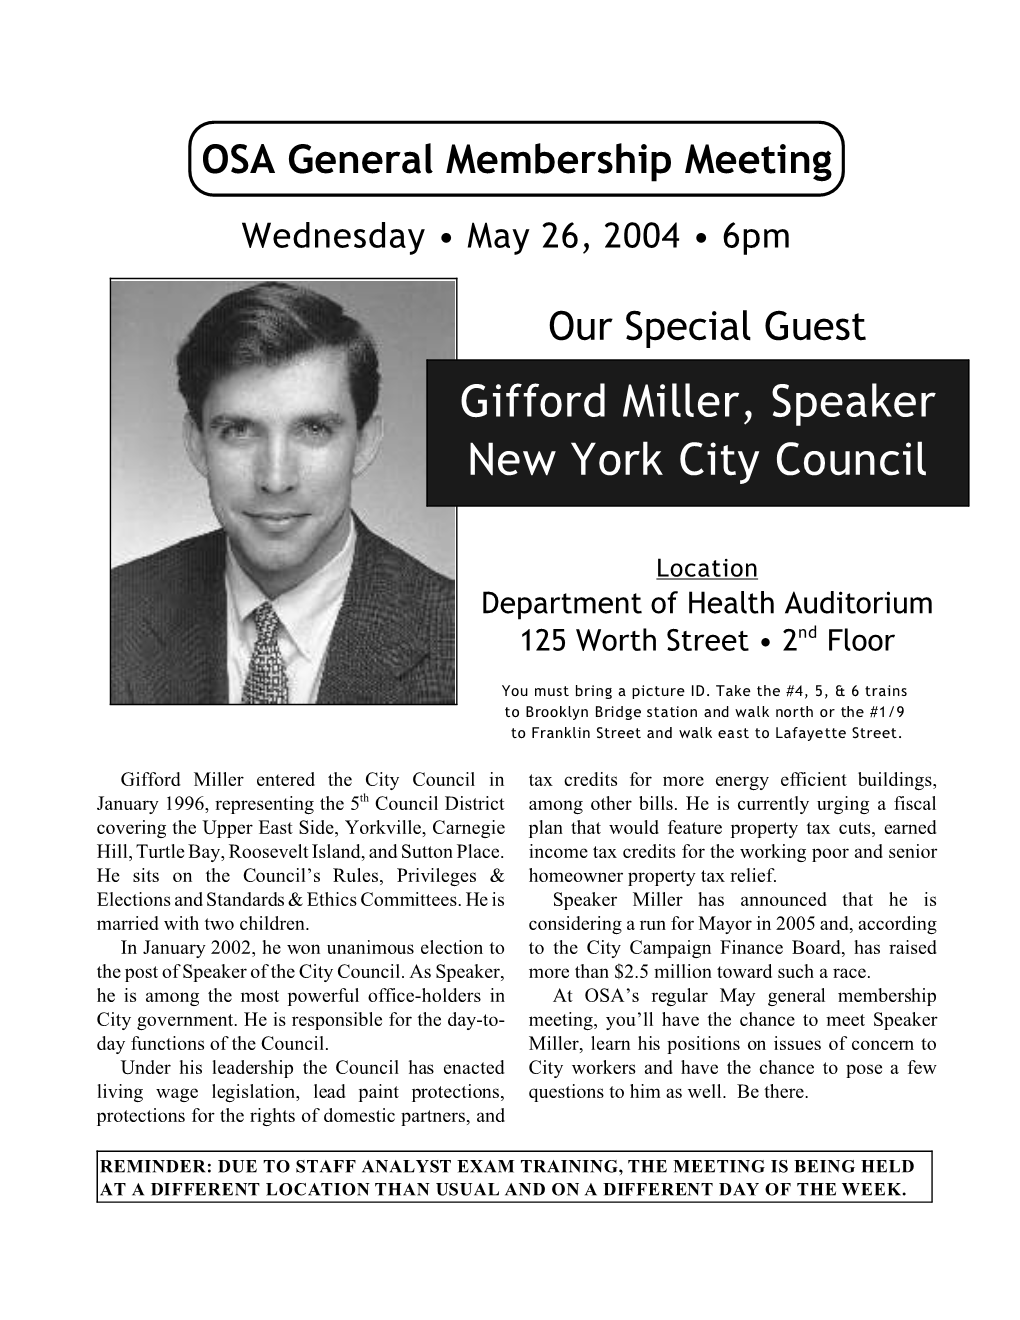 Gifford Miller, Speaker New York City Council